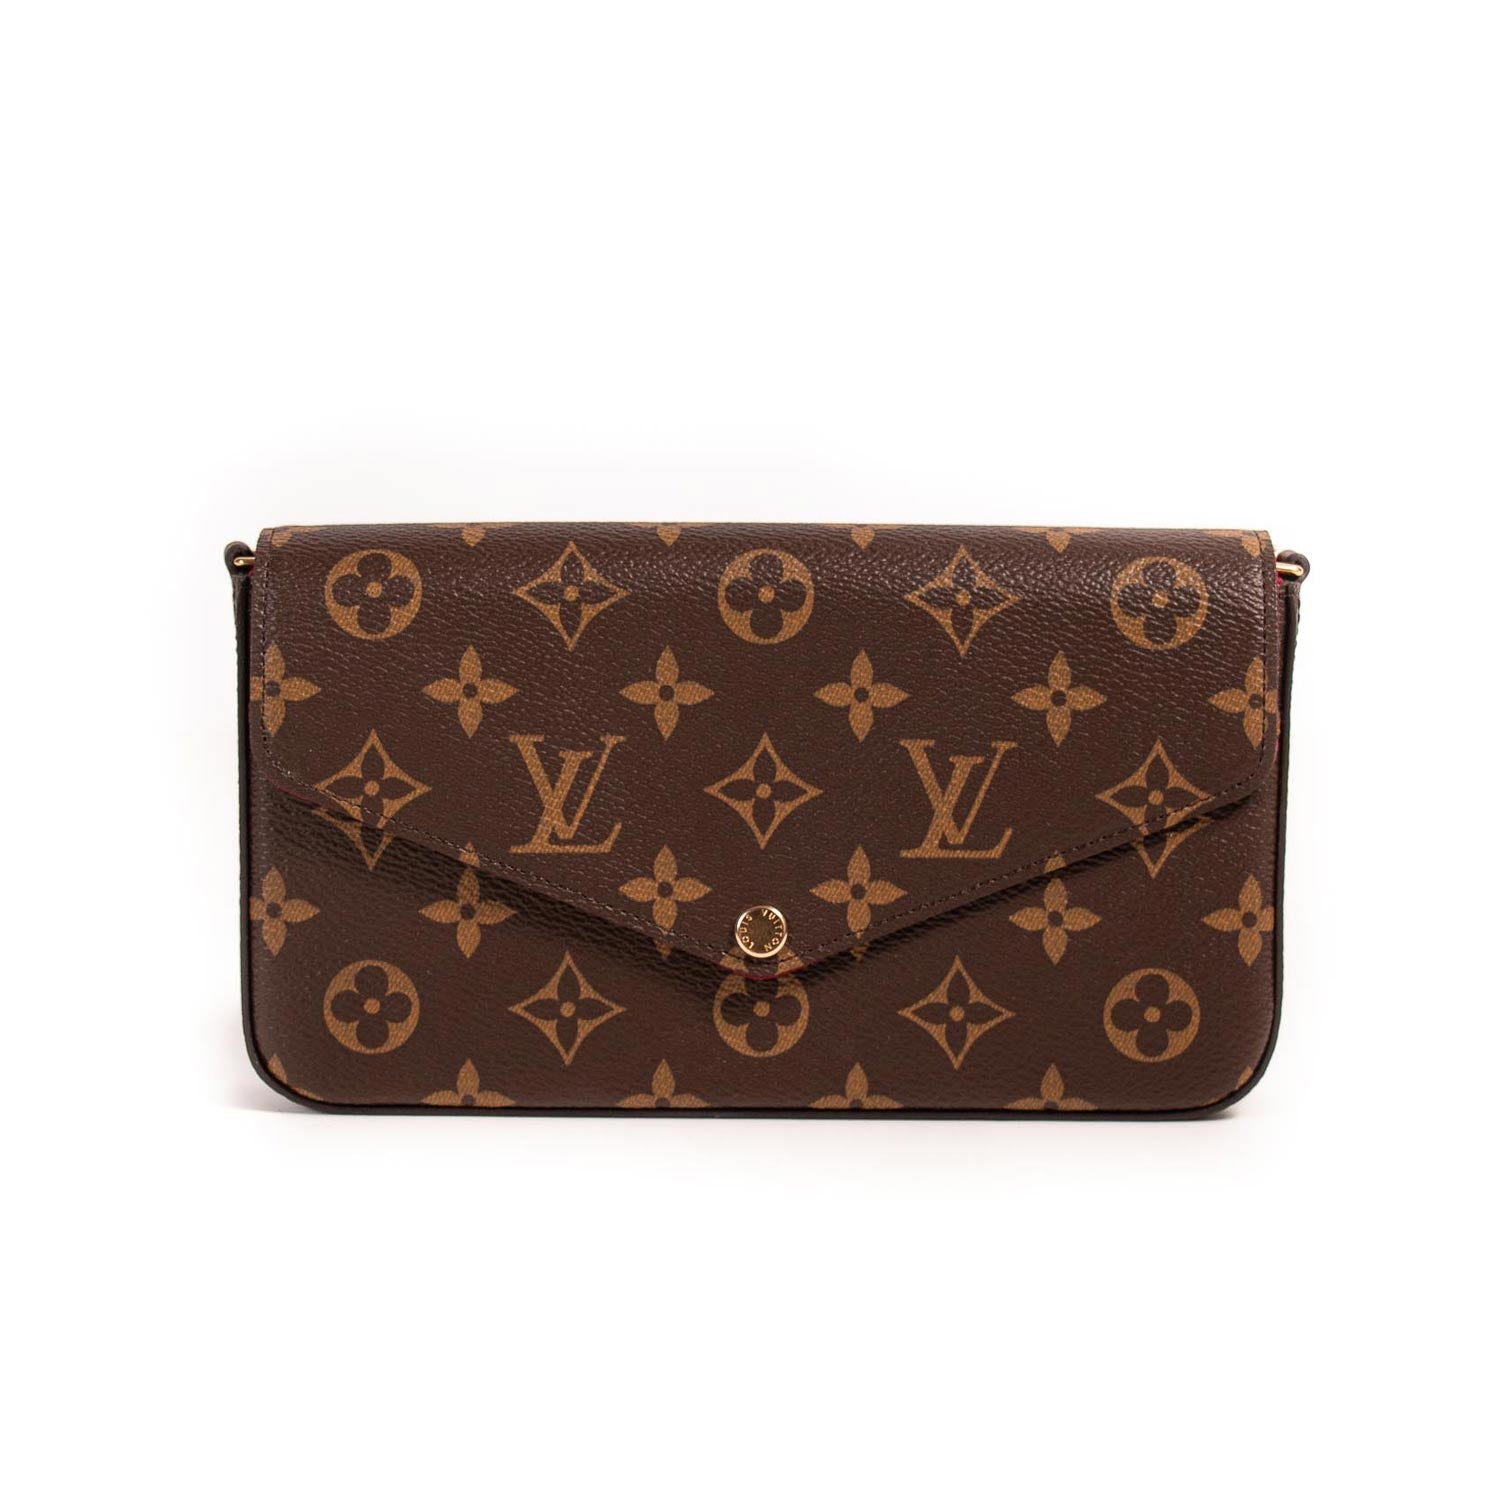 Preloved Louis Vuitton Felicie Pochette Monogram Bag TJ1127 060623 –  KimmieBBags LLC